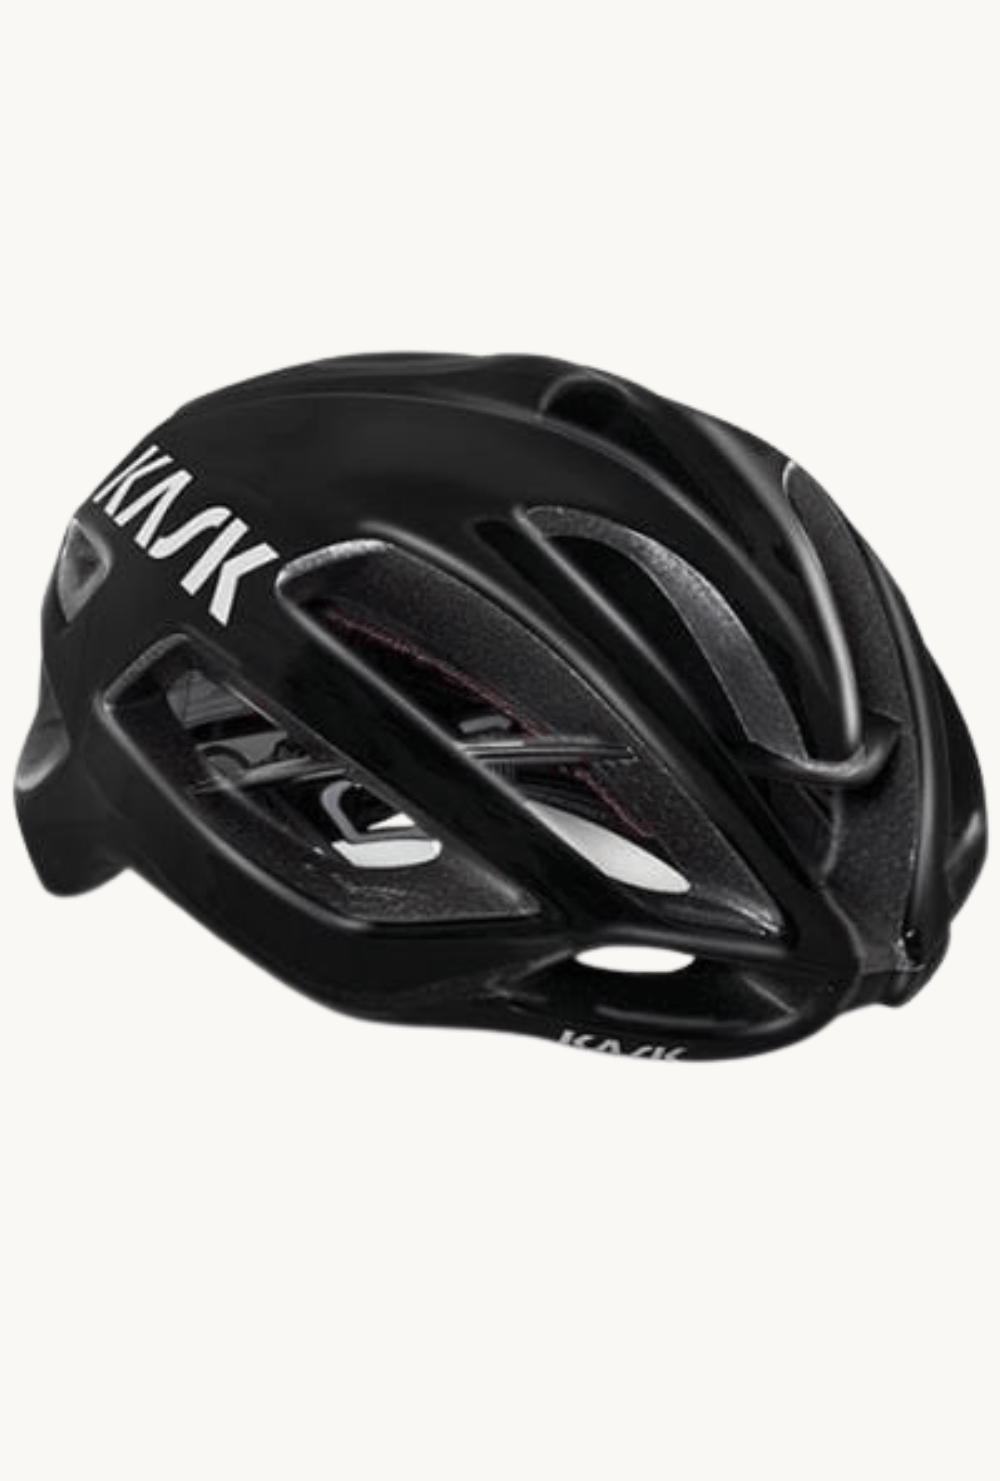 Helmet - Kask Protone Blackmedium (52-58cm) / Black